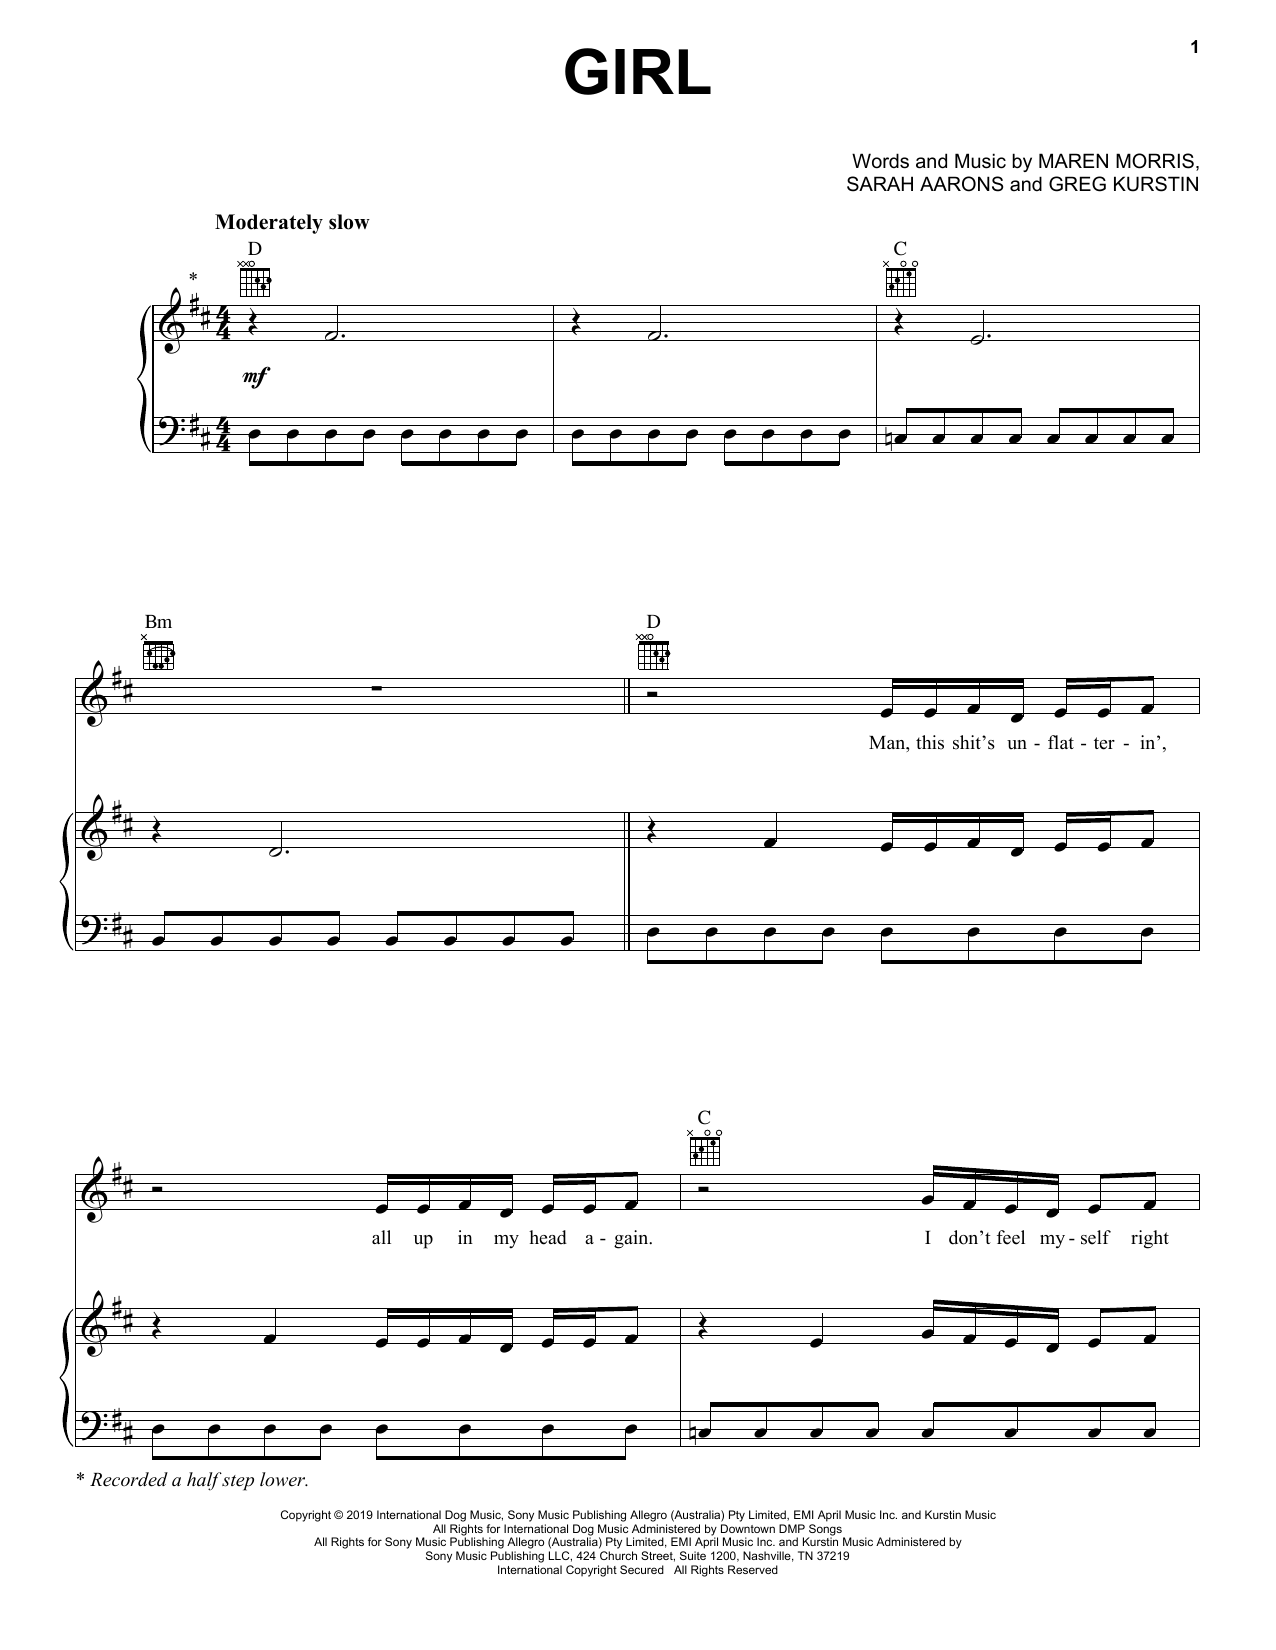 Maren Morris GIRL Sheet Music Notes & Chords for Easy Guitar Tab - Download or Print PDF